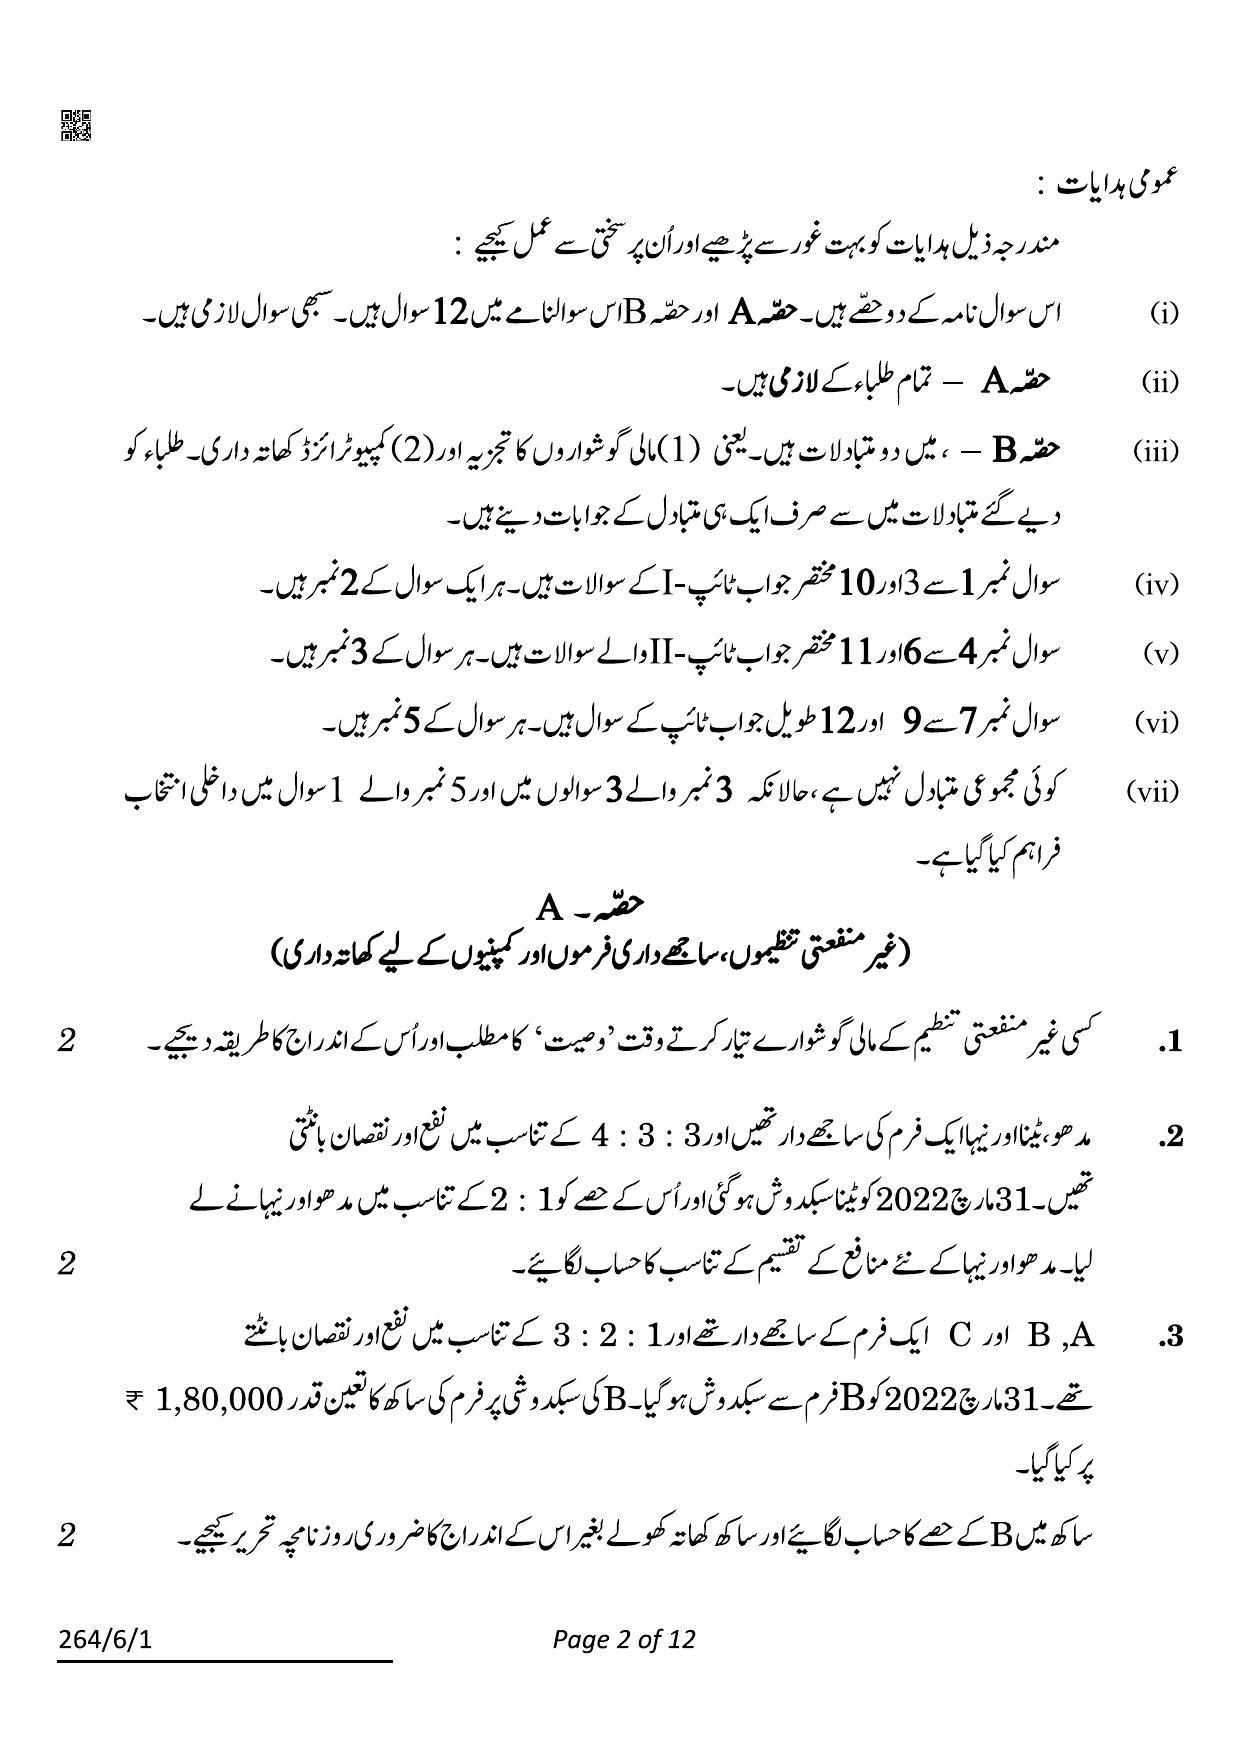 CBSE Class 12 264-6-1 Accountancy Urdu 2022 Compartment Question Paper - Page 2